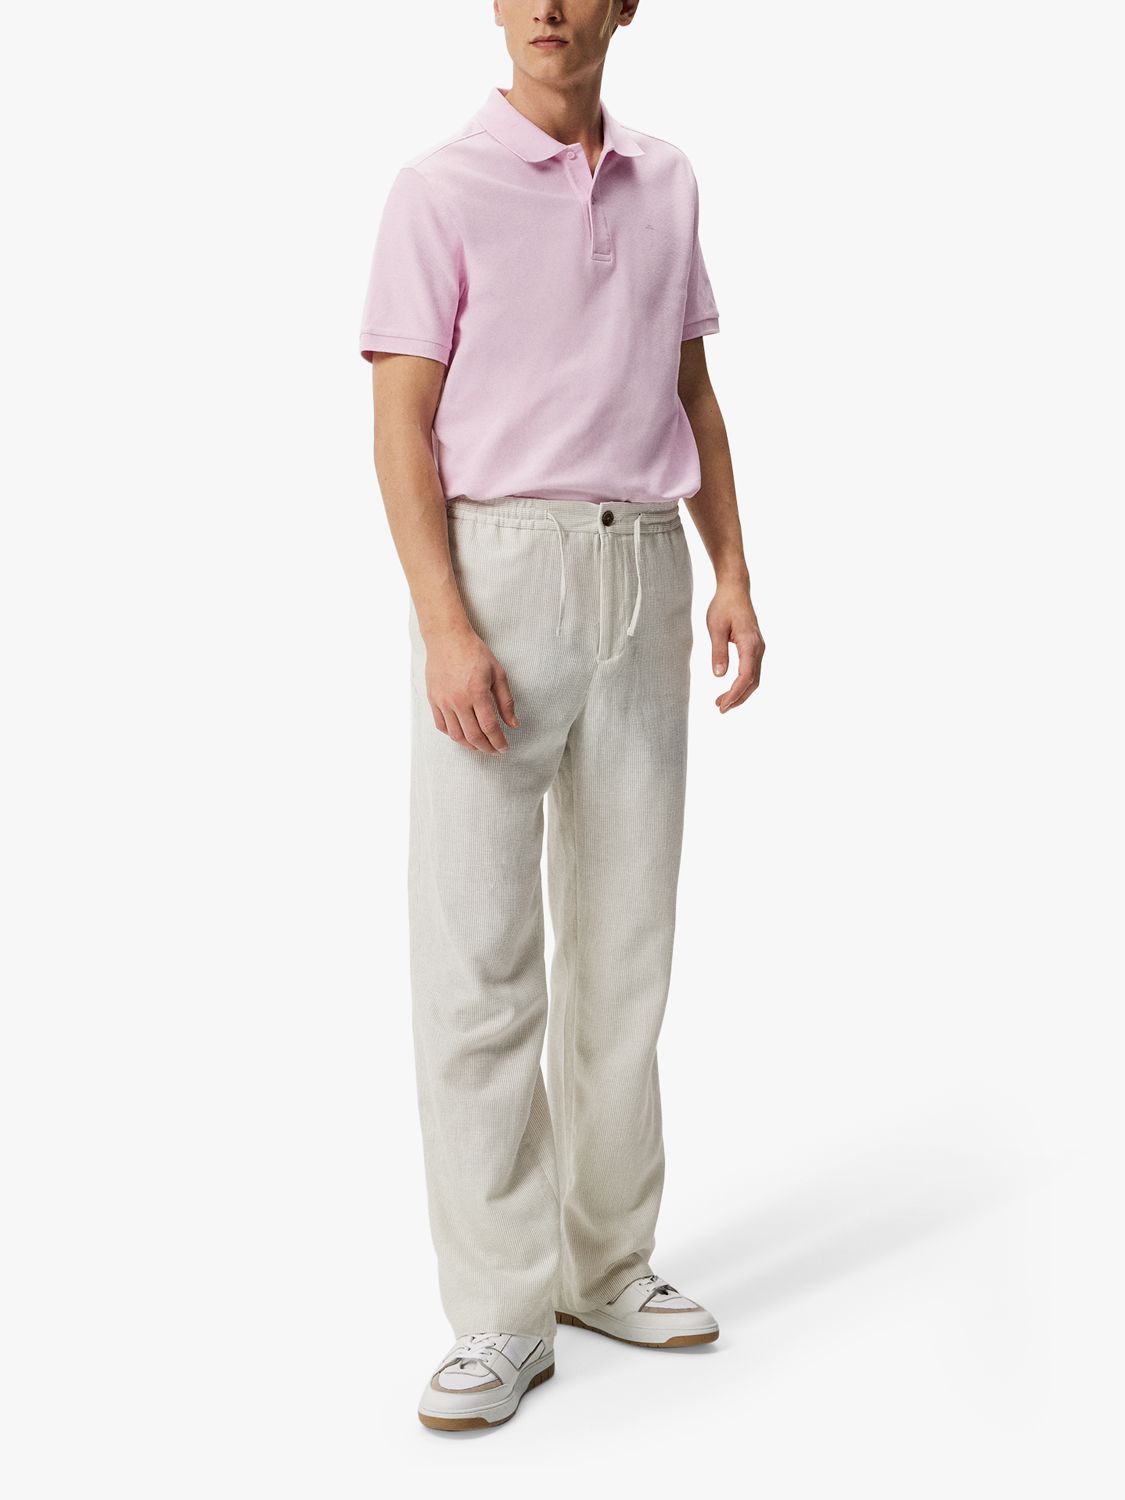 J.Lindeberg Troy Cotton Polo Shirt, Pink Lavender, S